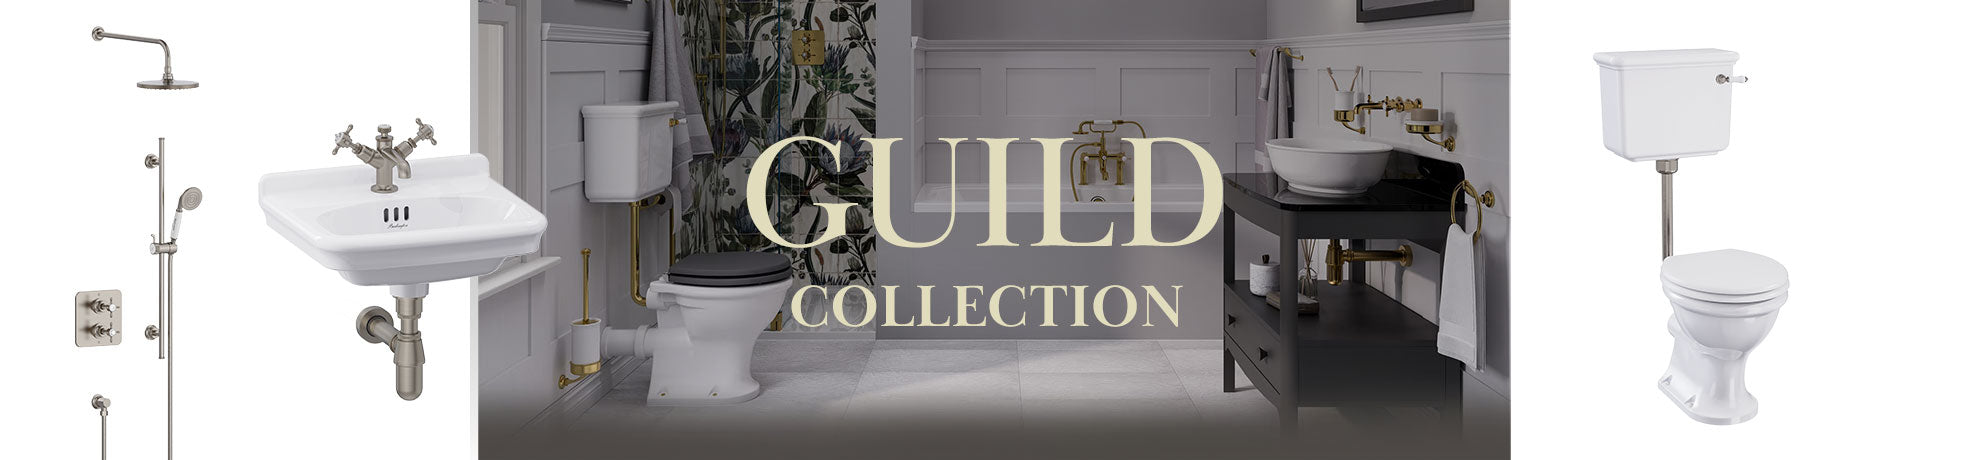 Burlington Guild Bathroom Collection